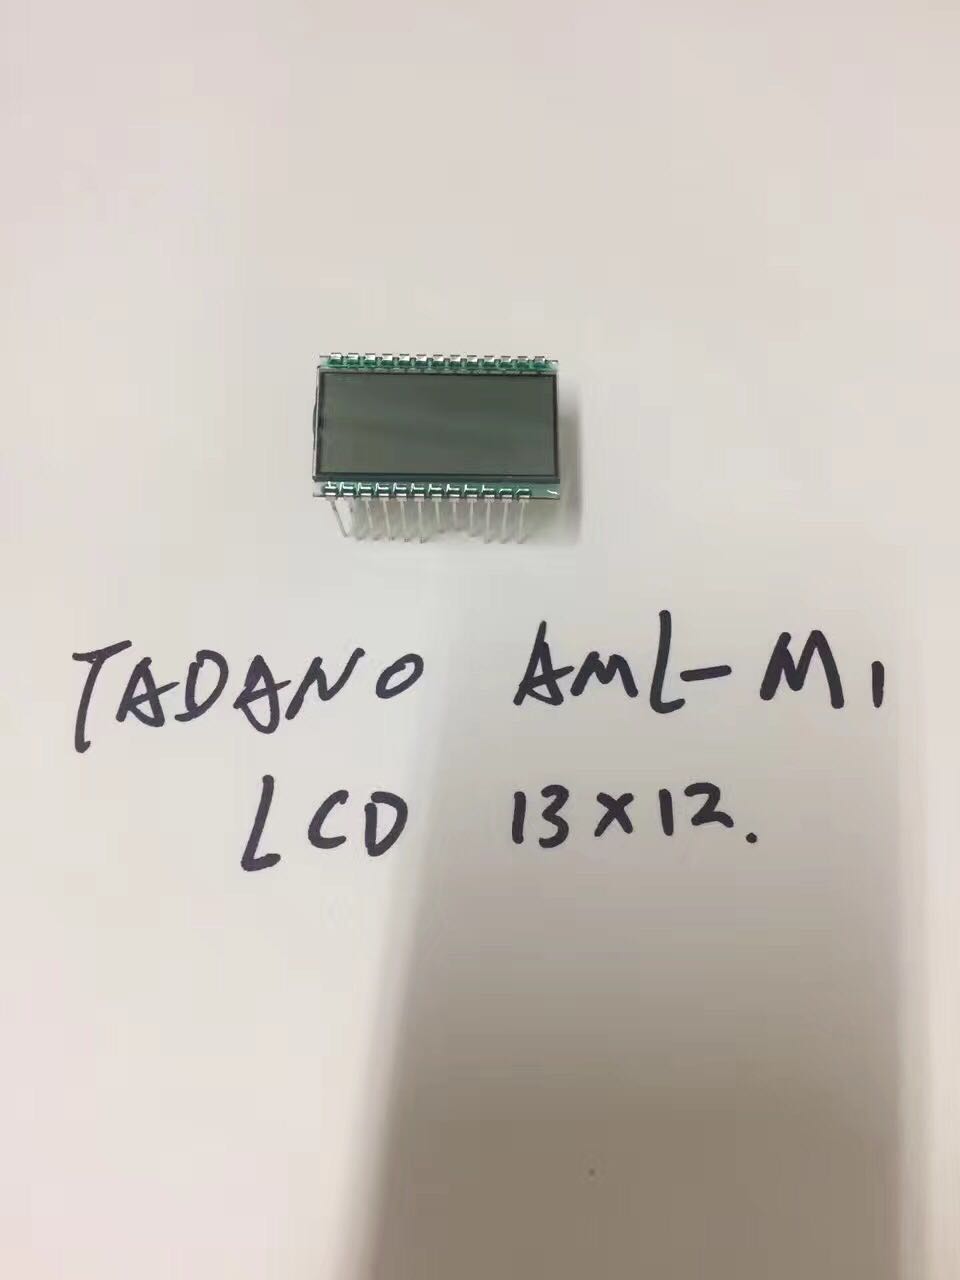 Tadano AML-M1/ AML-M2 LCD 13*13  3*12